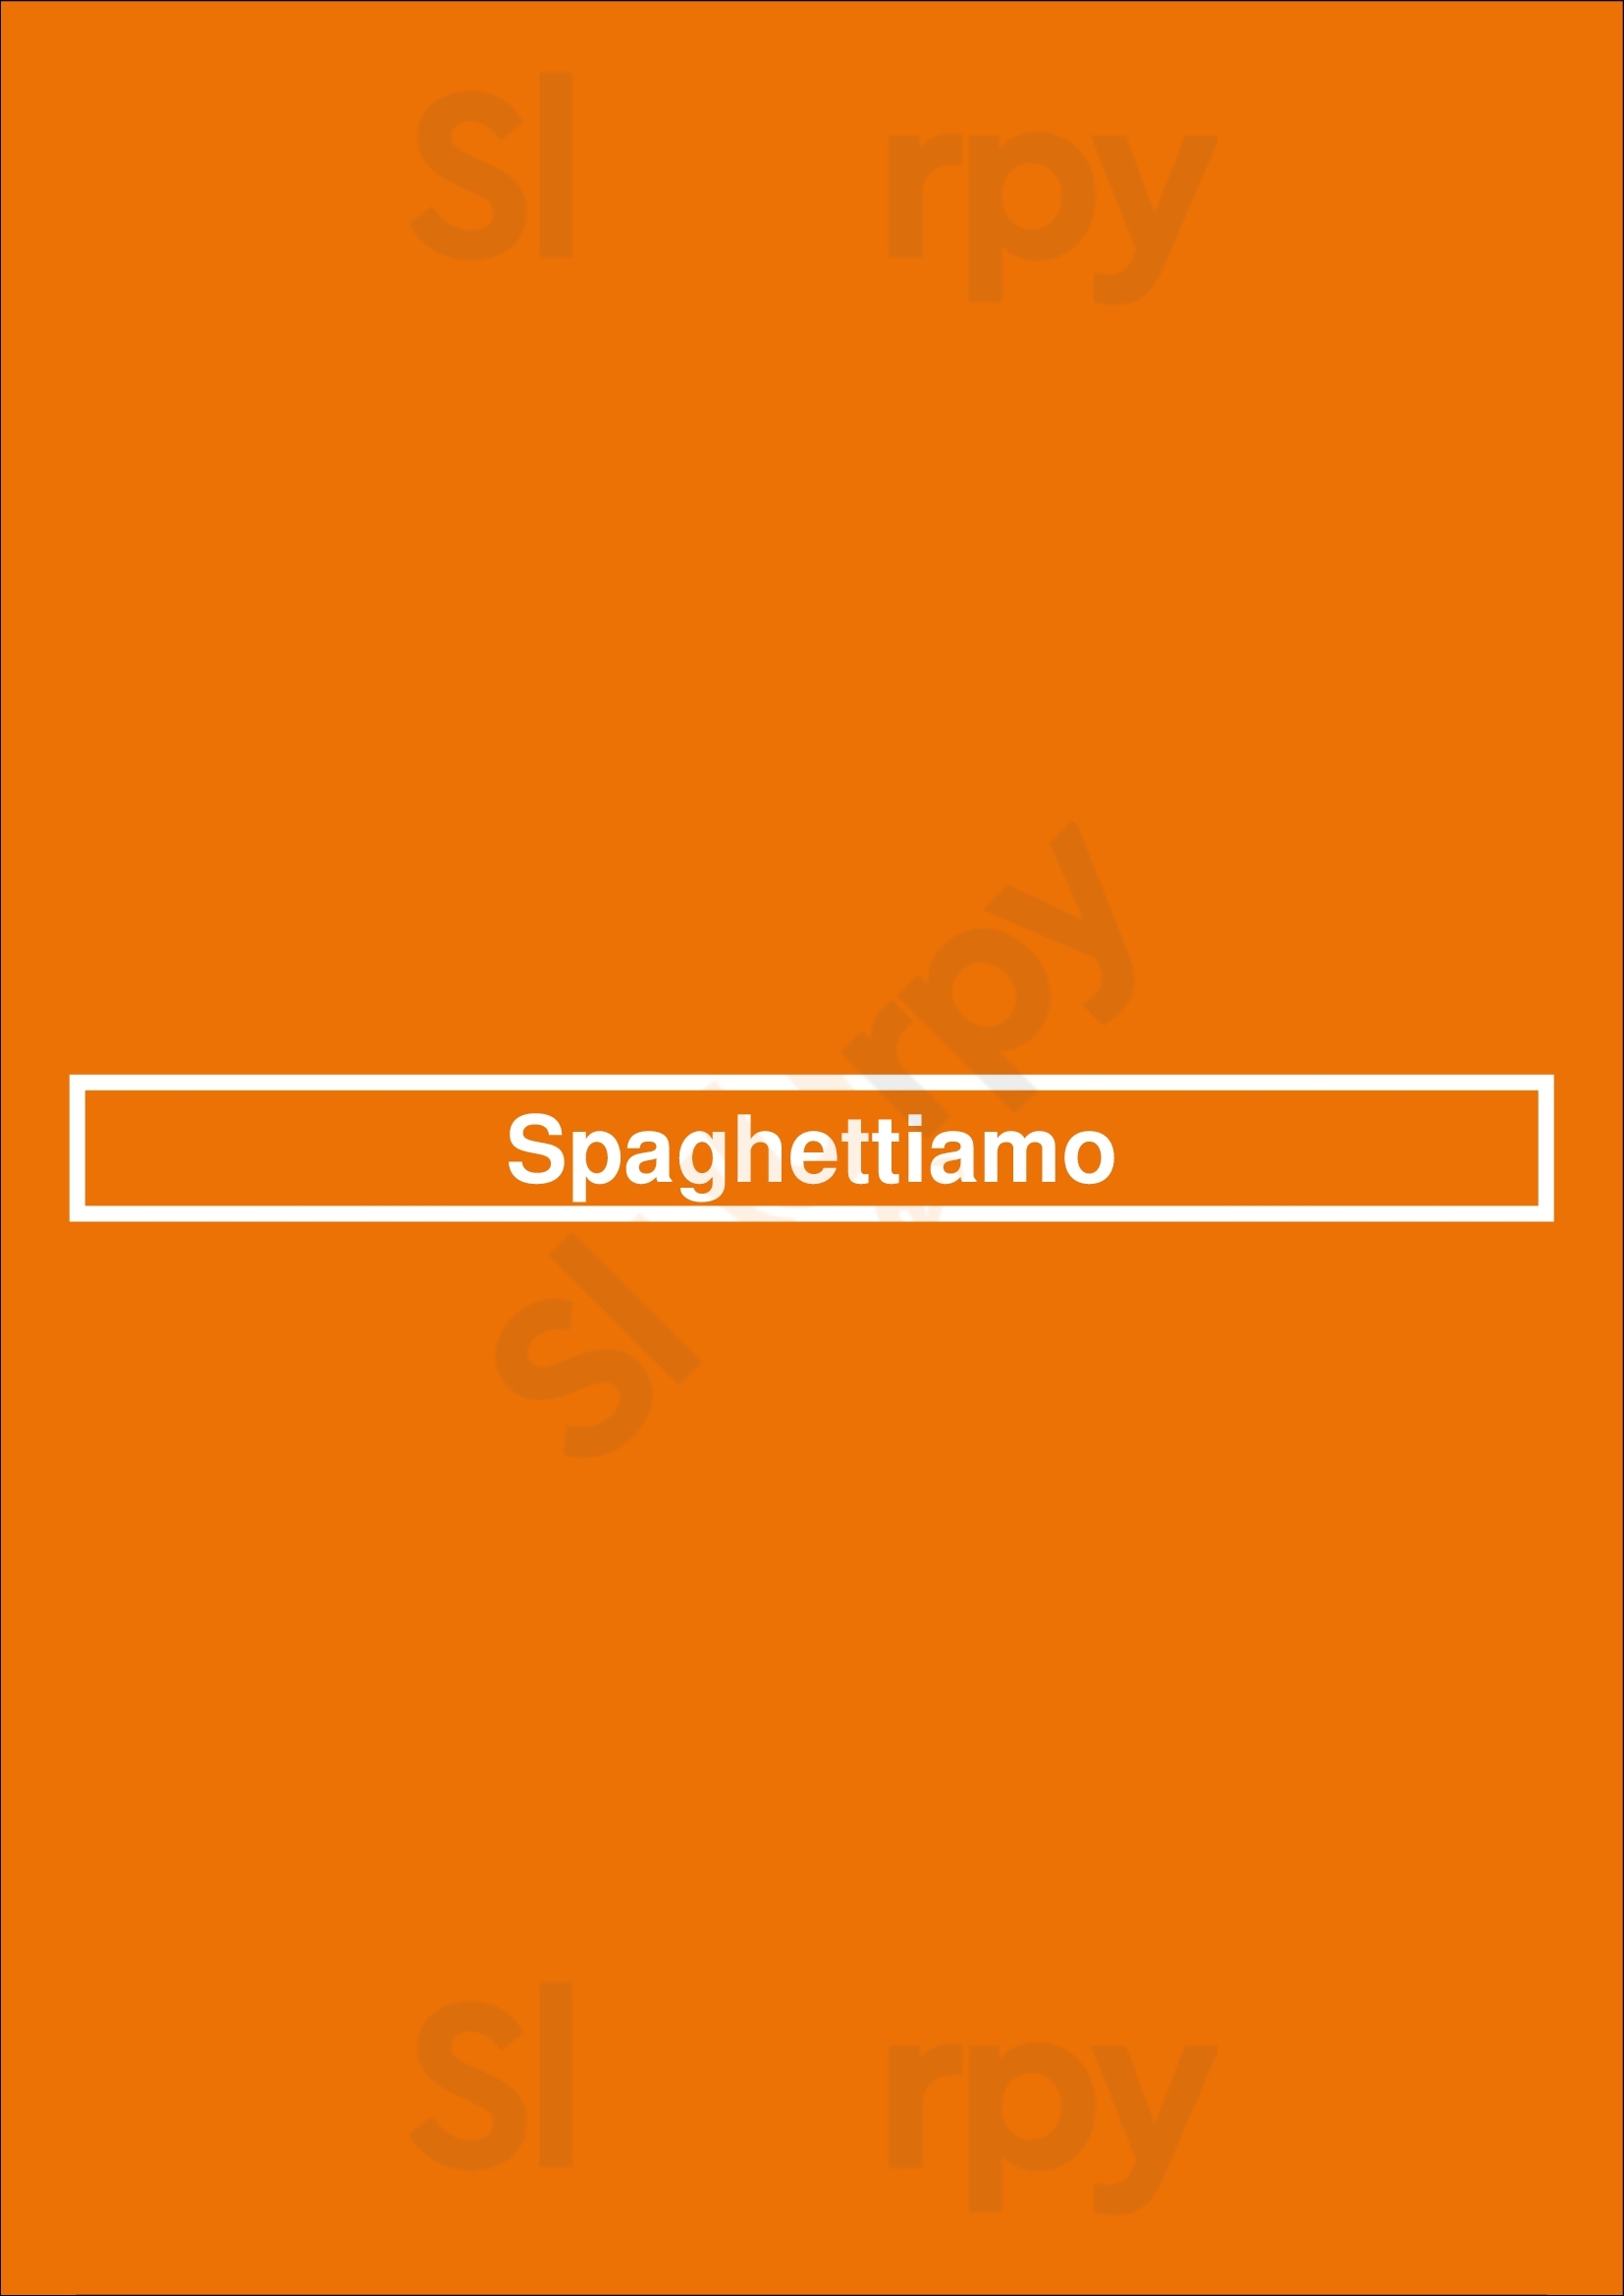 Spaghettiamo Bussum Menu - 1